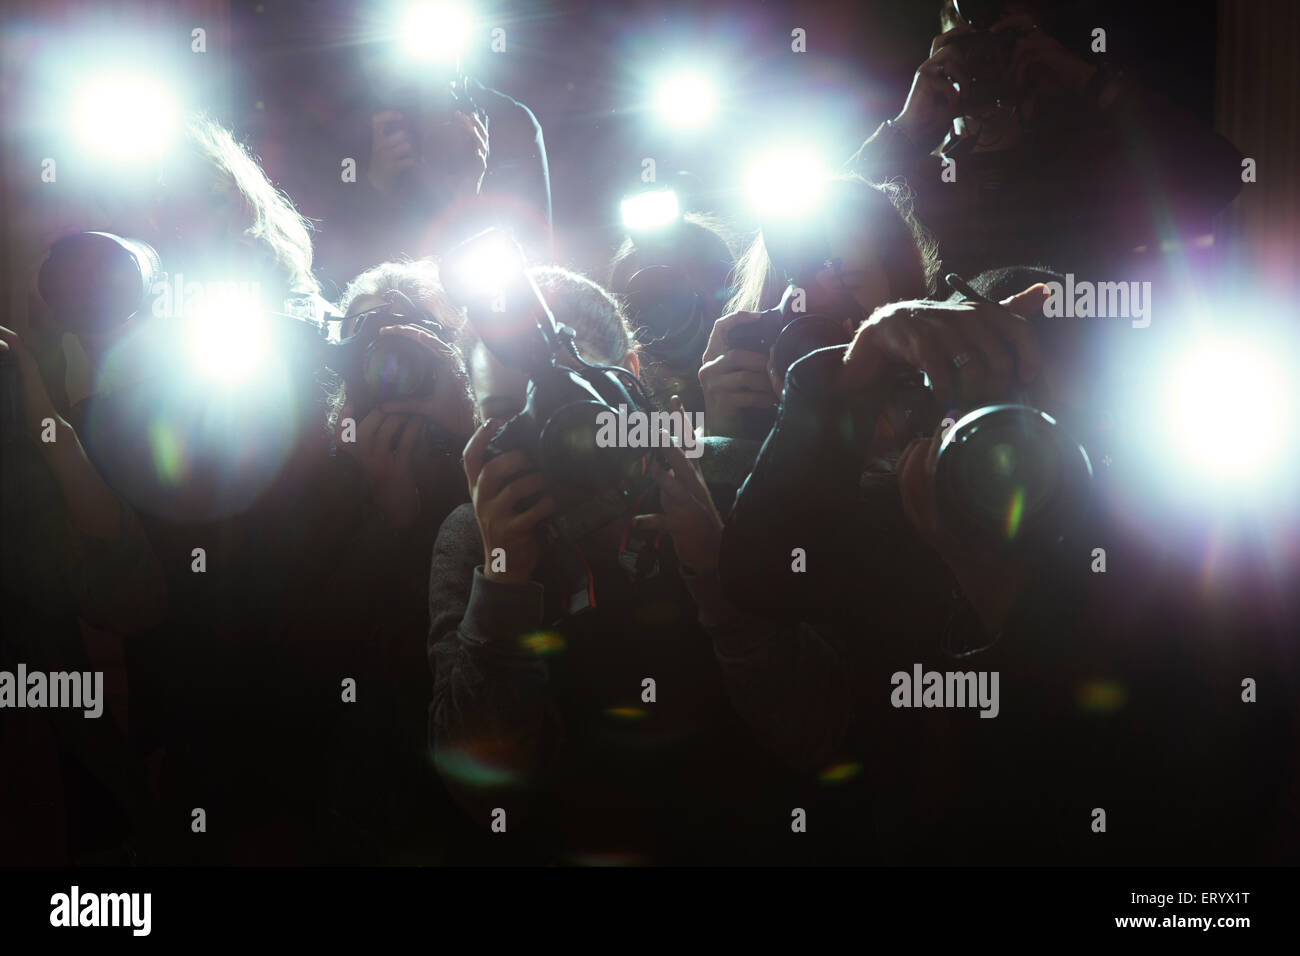 Close up of paparazzi photographers pointing cameras Stock Photo